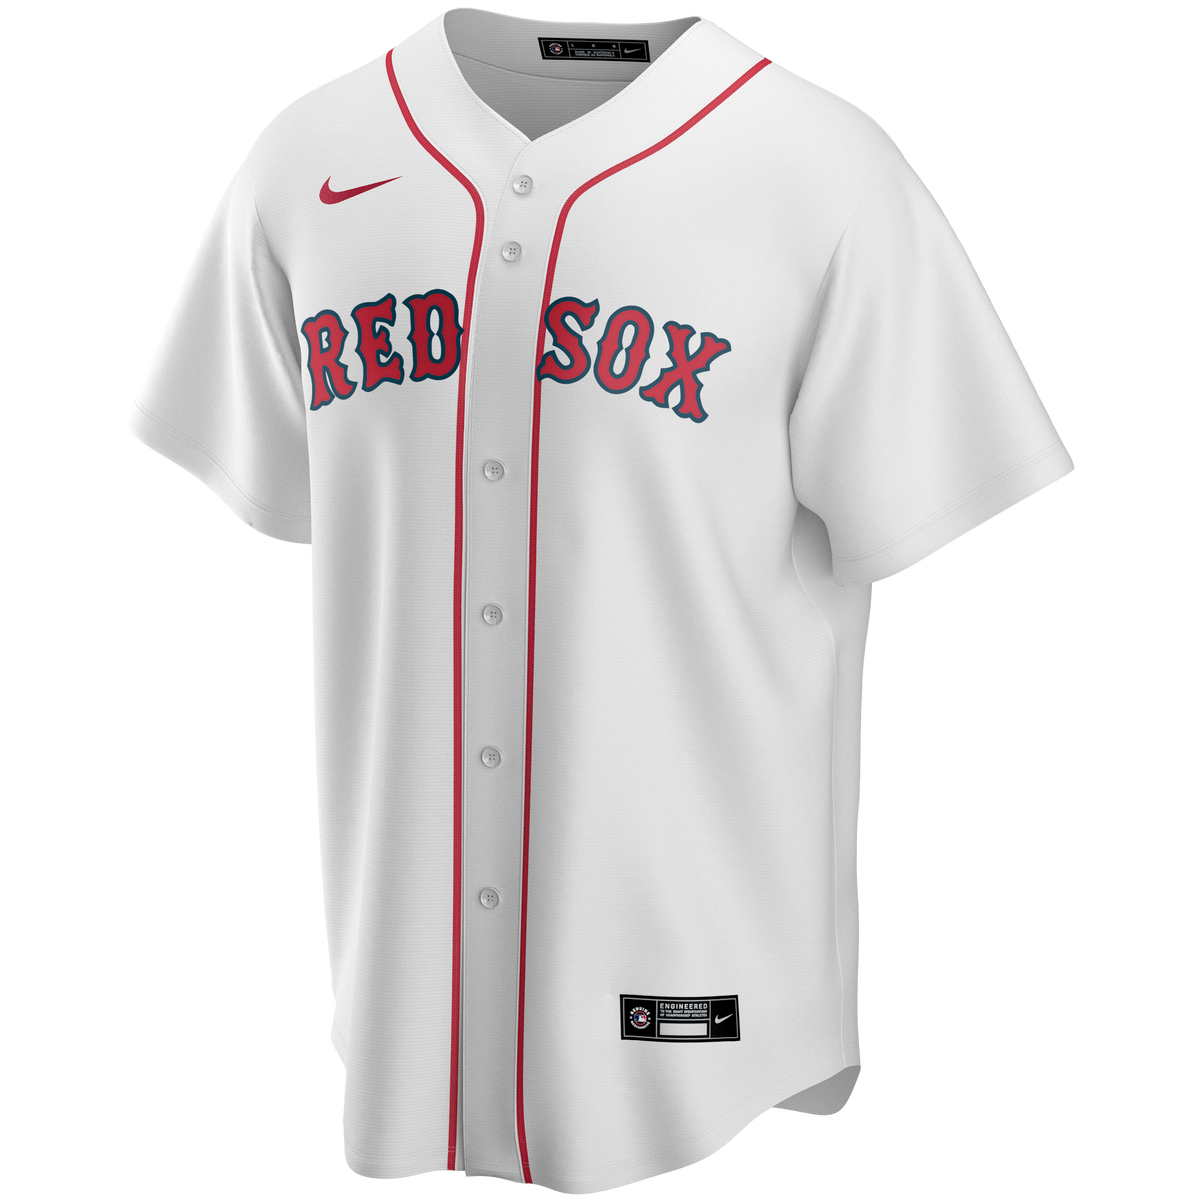 New Red Sox Road Jerseys